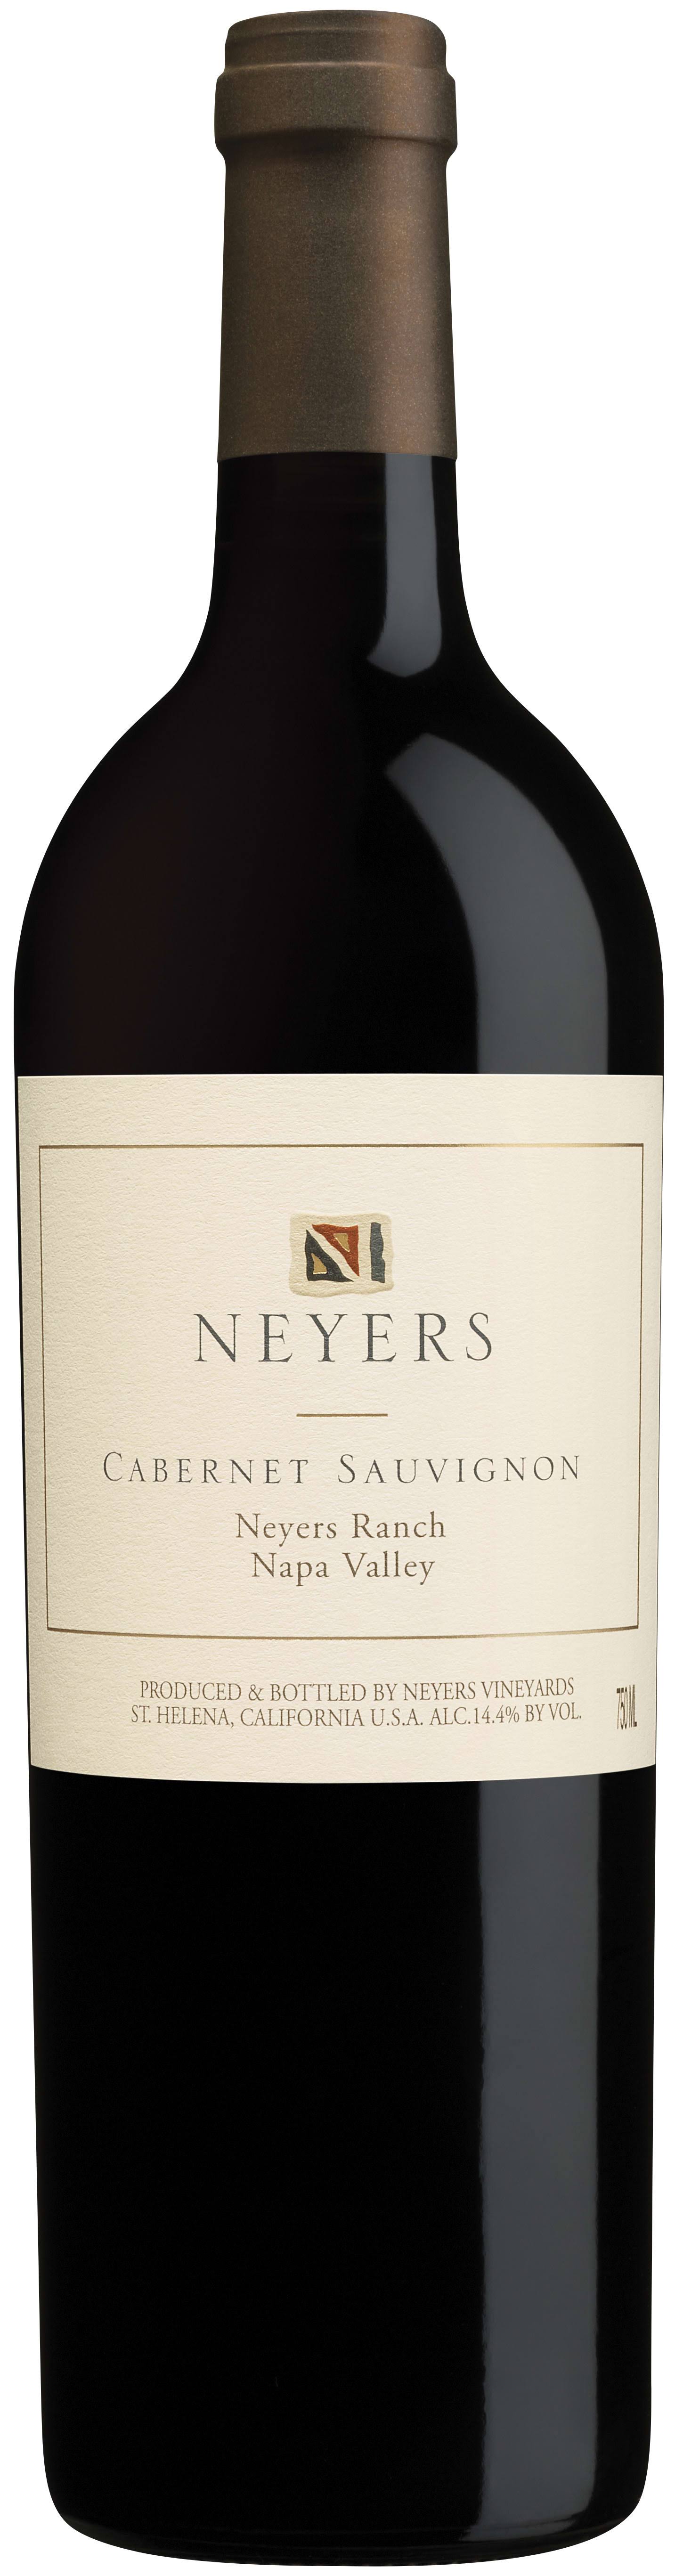 Neyers Cabernet Sauvignon, California (Vintage Varies) - 750 ml bottle